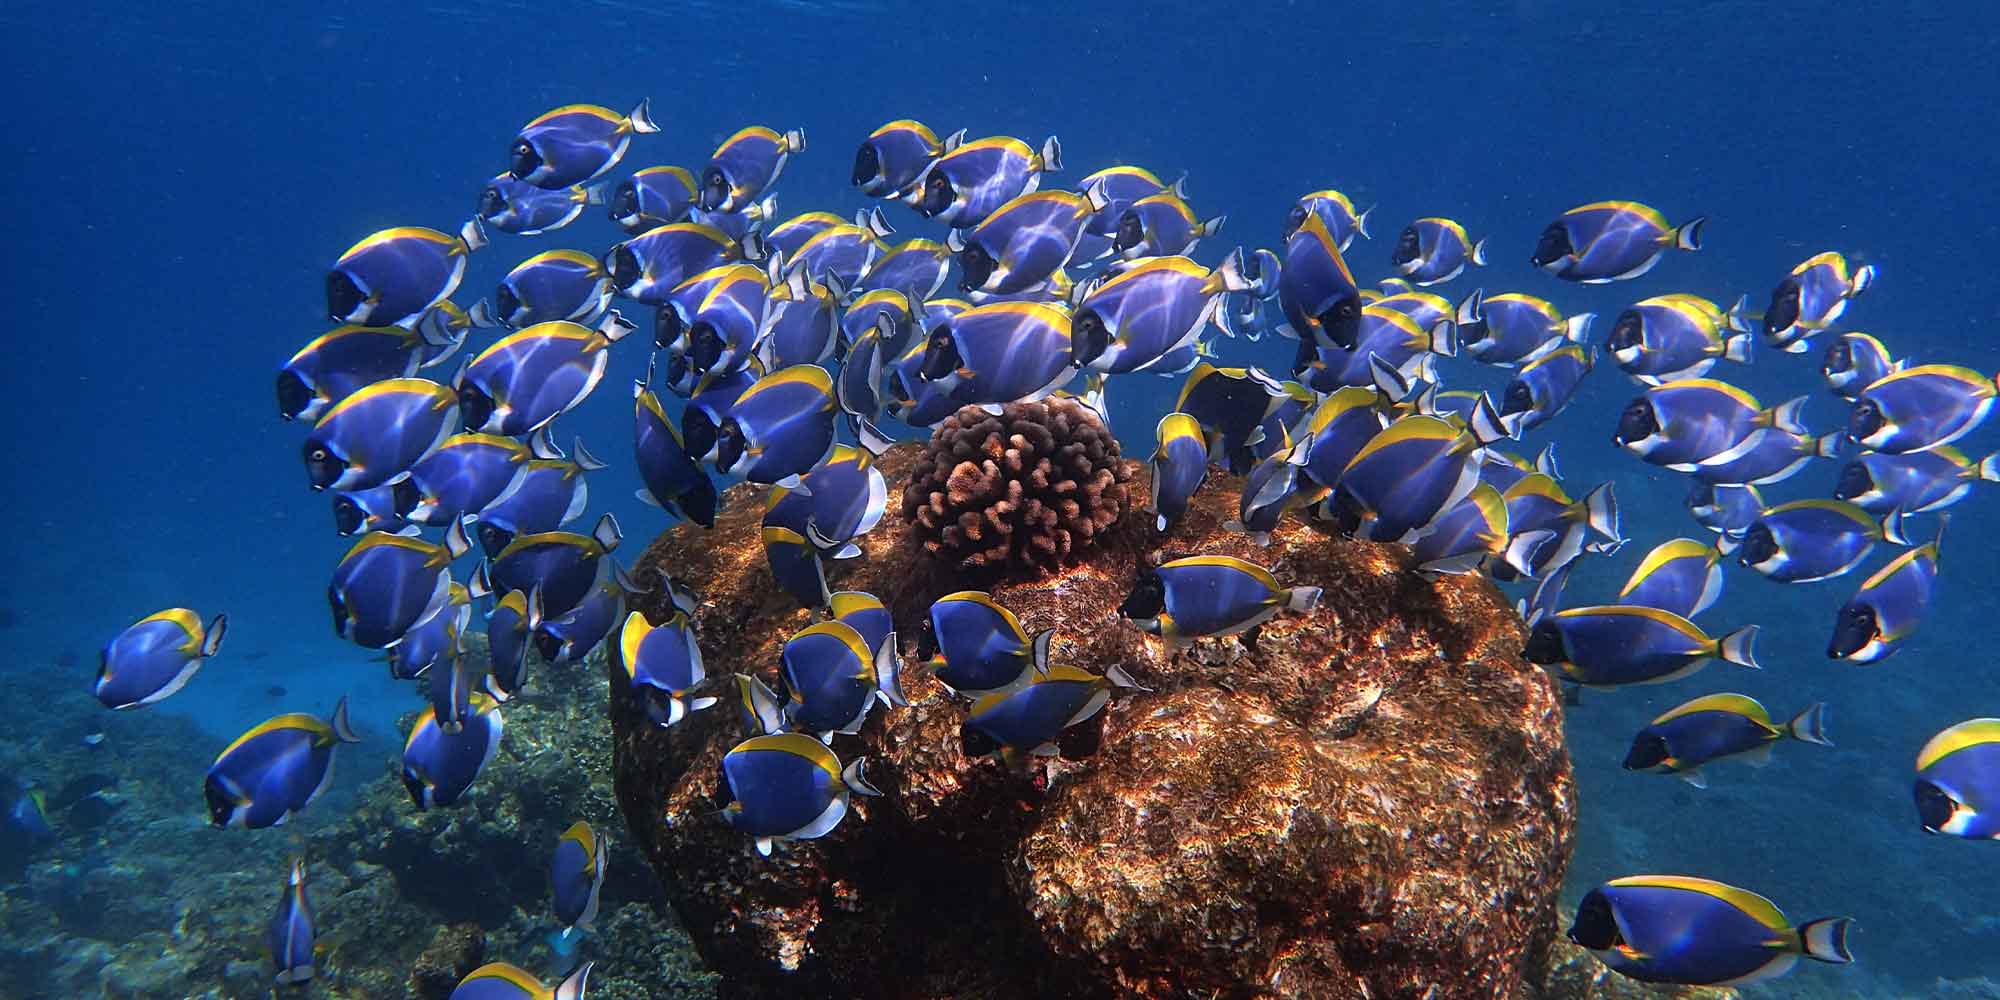 Underwater Aquatic Kingdom at Baros Maldives